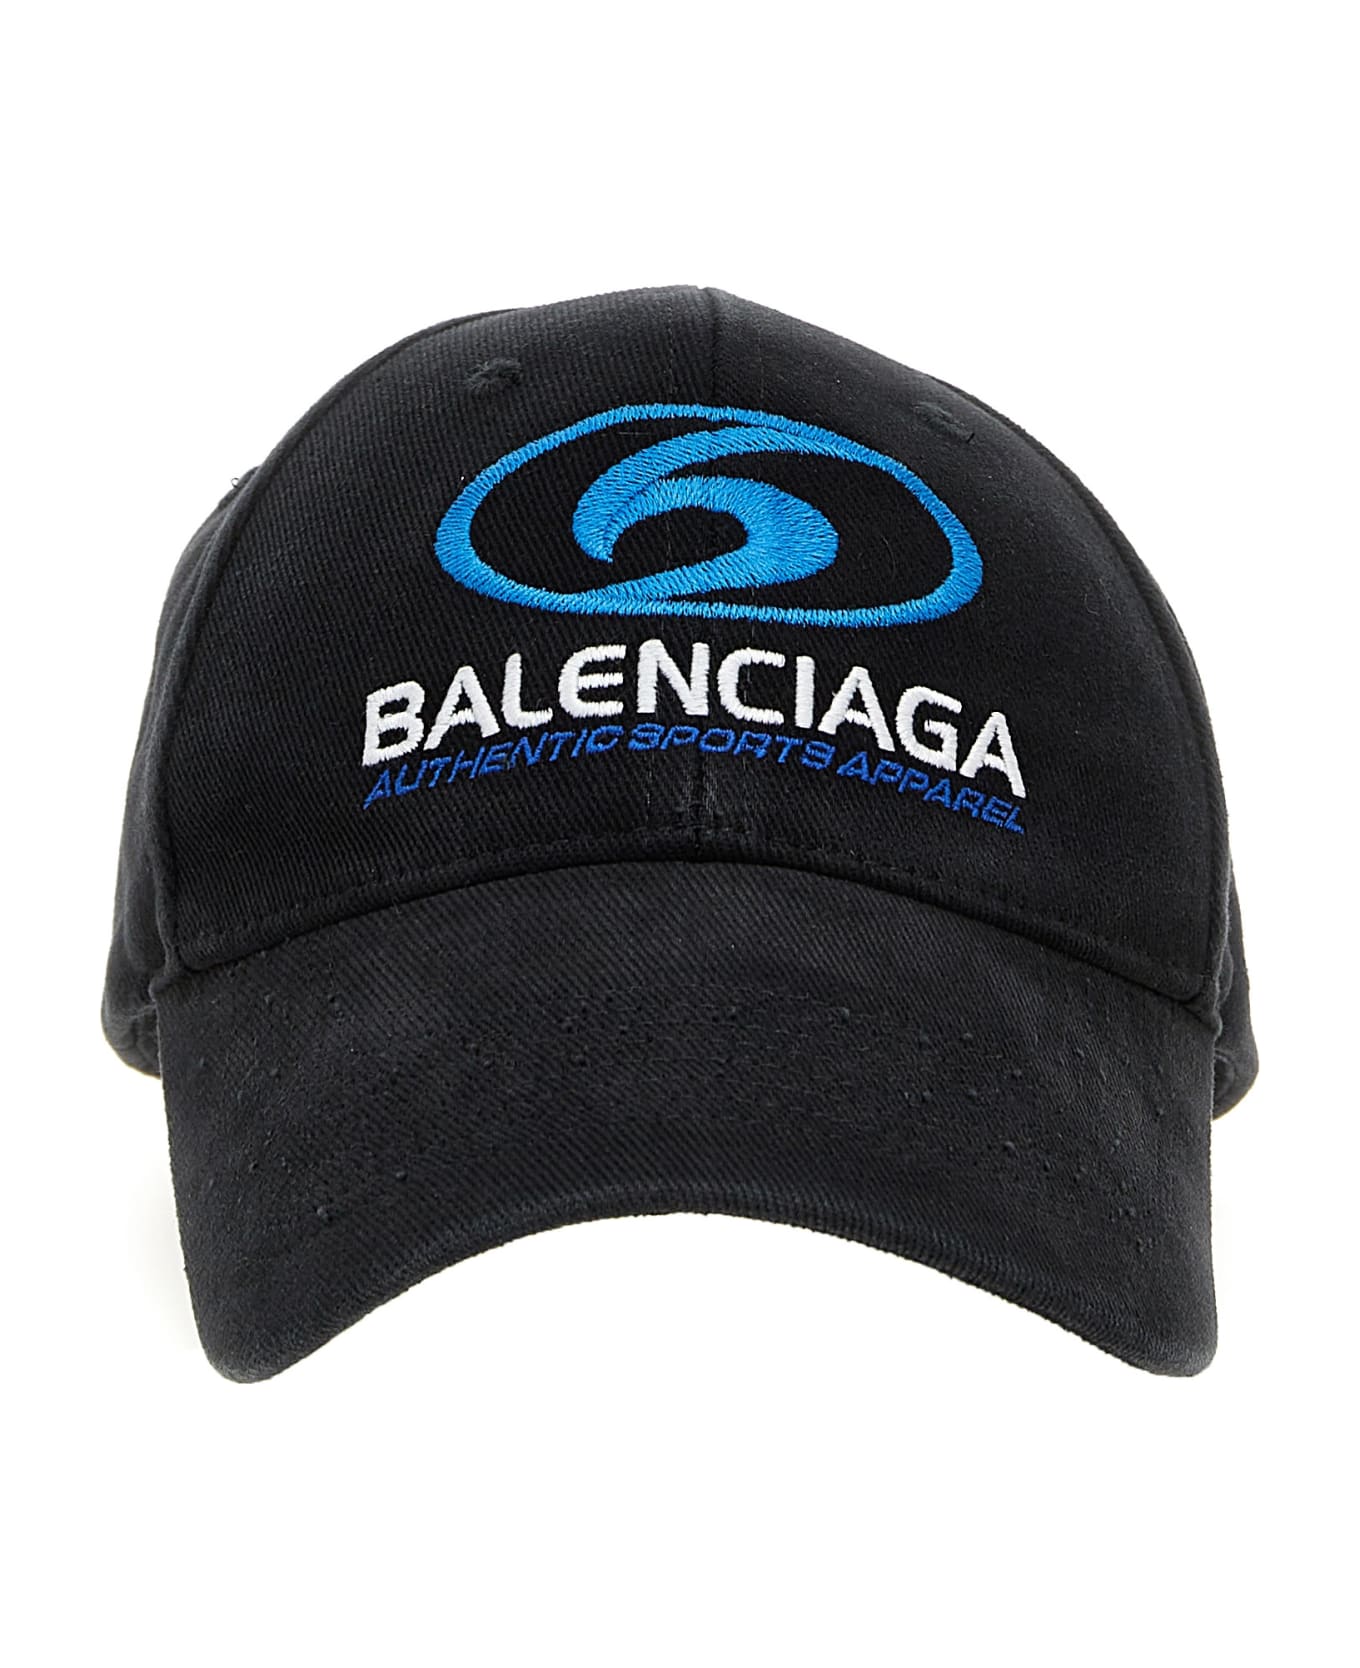 Balenciaga 'surfer' Cap - Washed Black